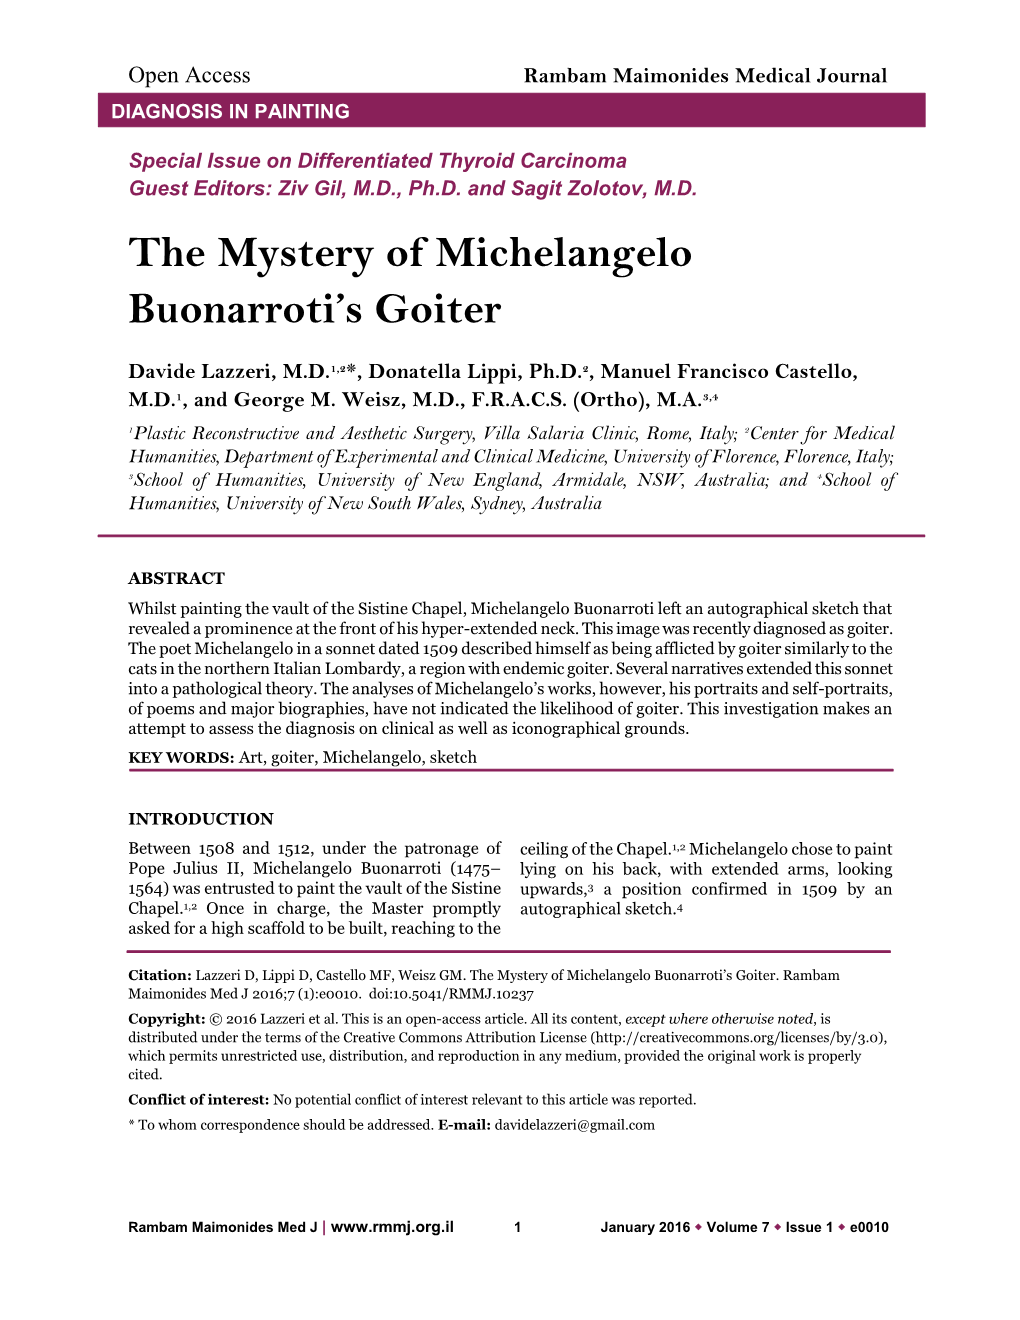 The Mystery of Michelangelo Buonarroti's Goiter